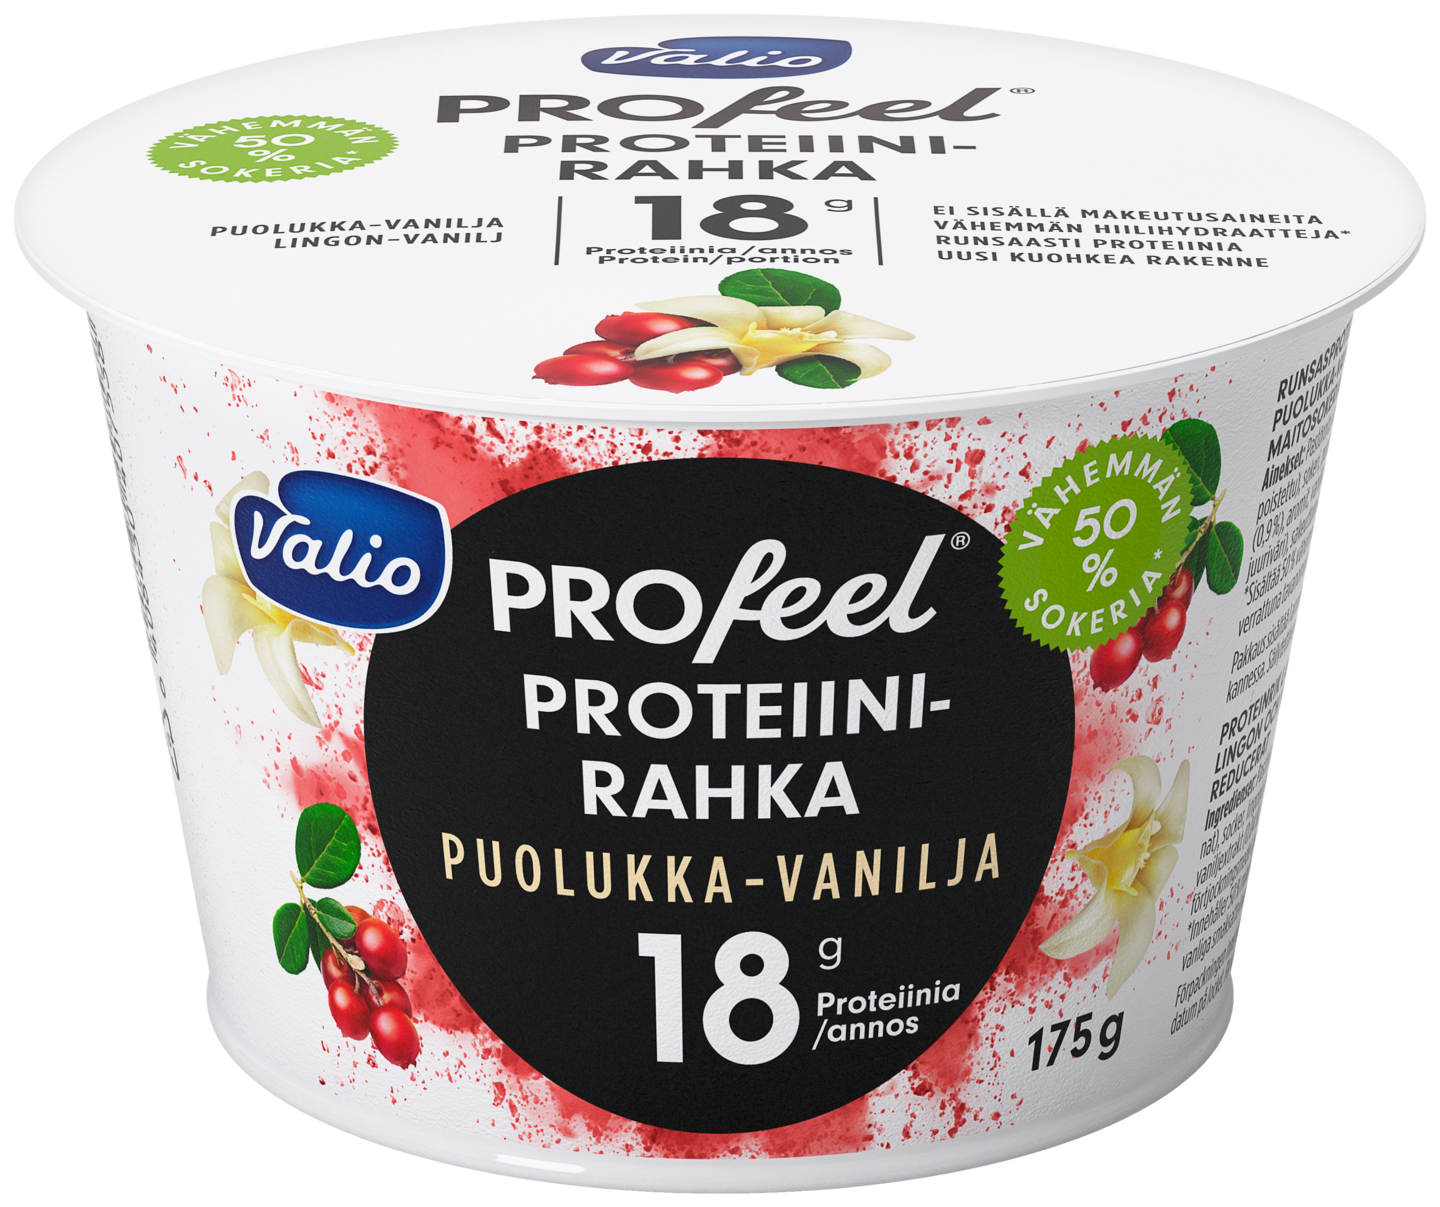 Valio PROfeel proteiinirahka 175 g puolukka-vanilja vähemmän hiilihydraatteja laktoositon